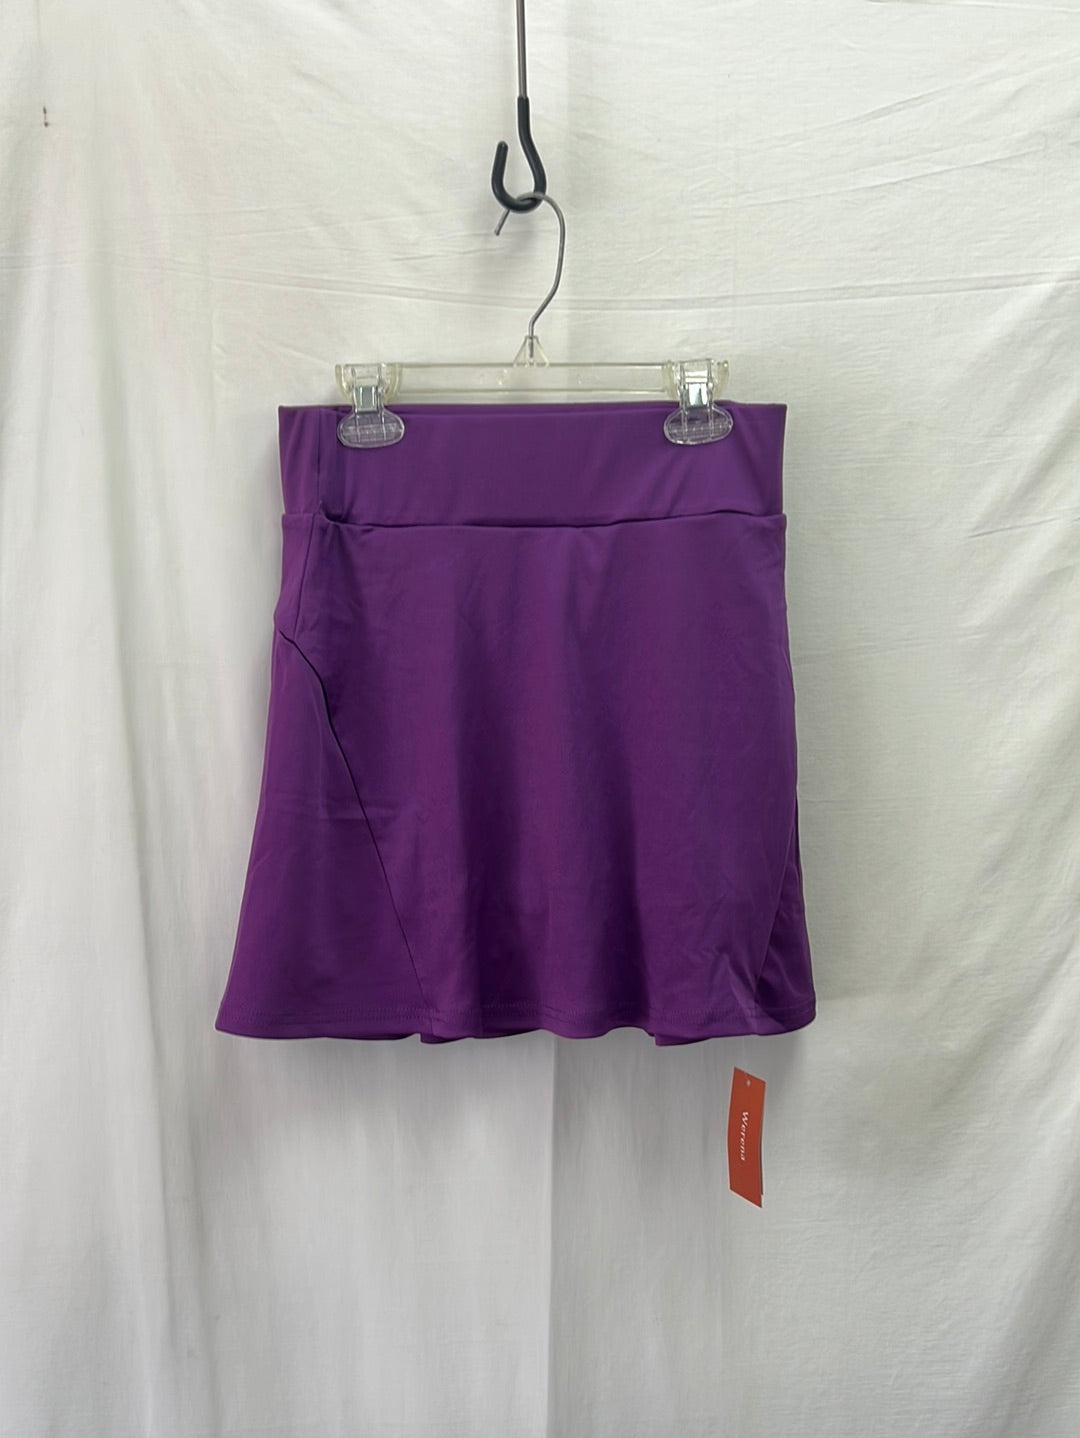 / Werena Black Women's Tennis / Athletic Skirt Skort Size